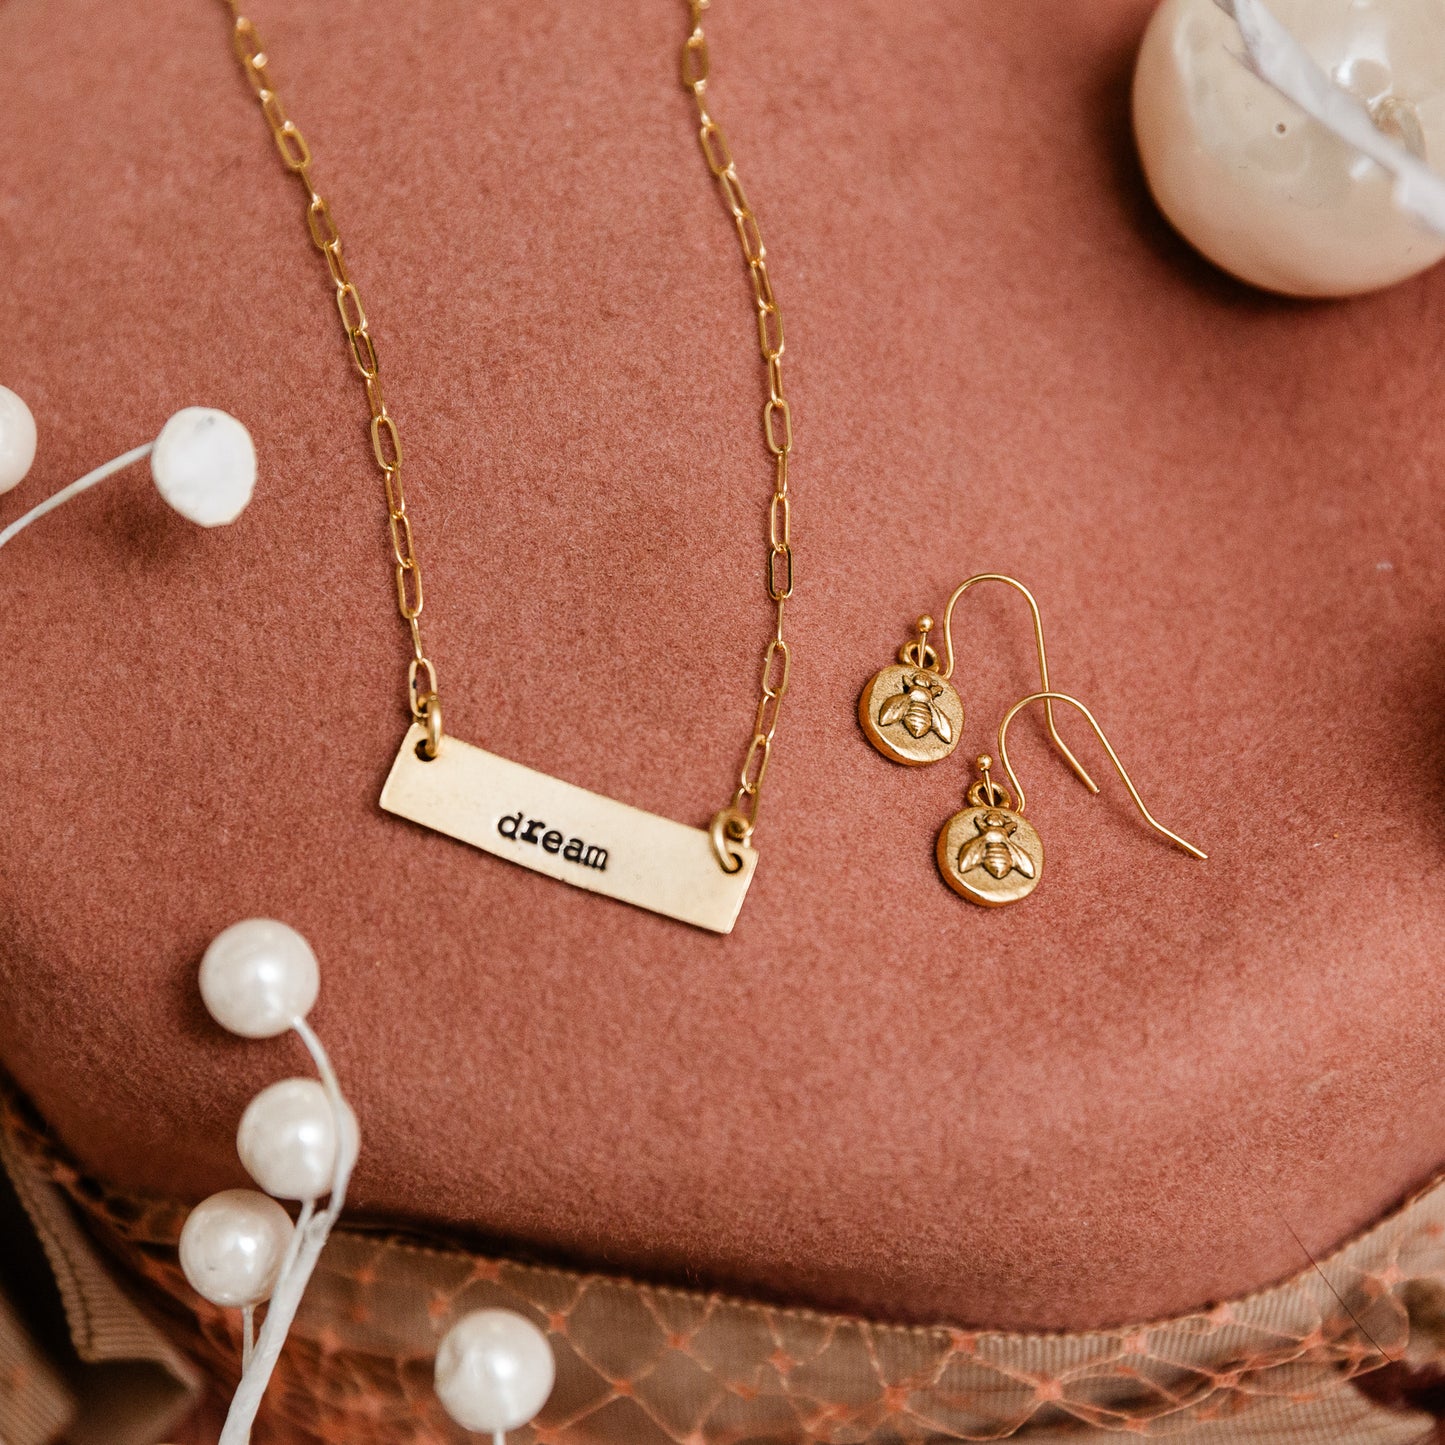 April “God Dreams“ Necklace & Earrings